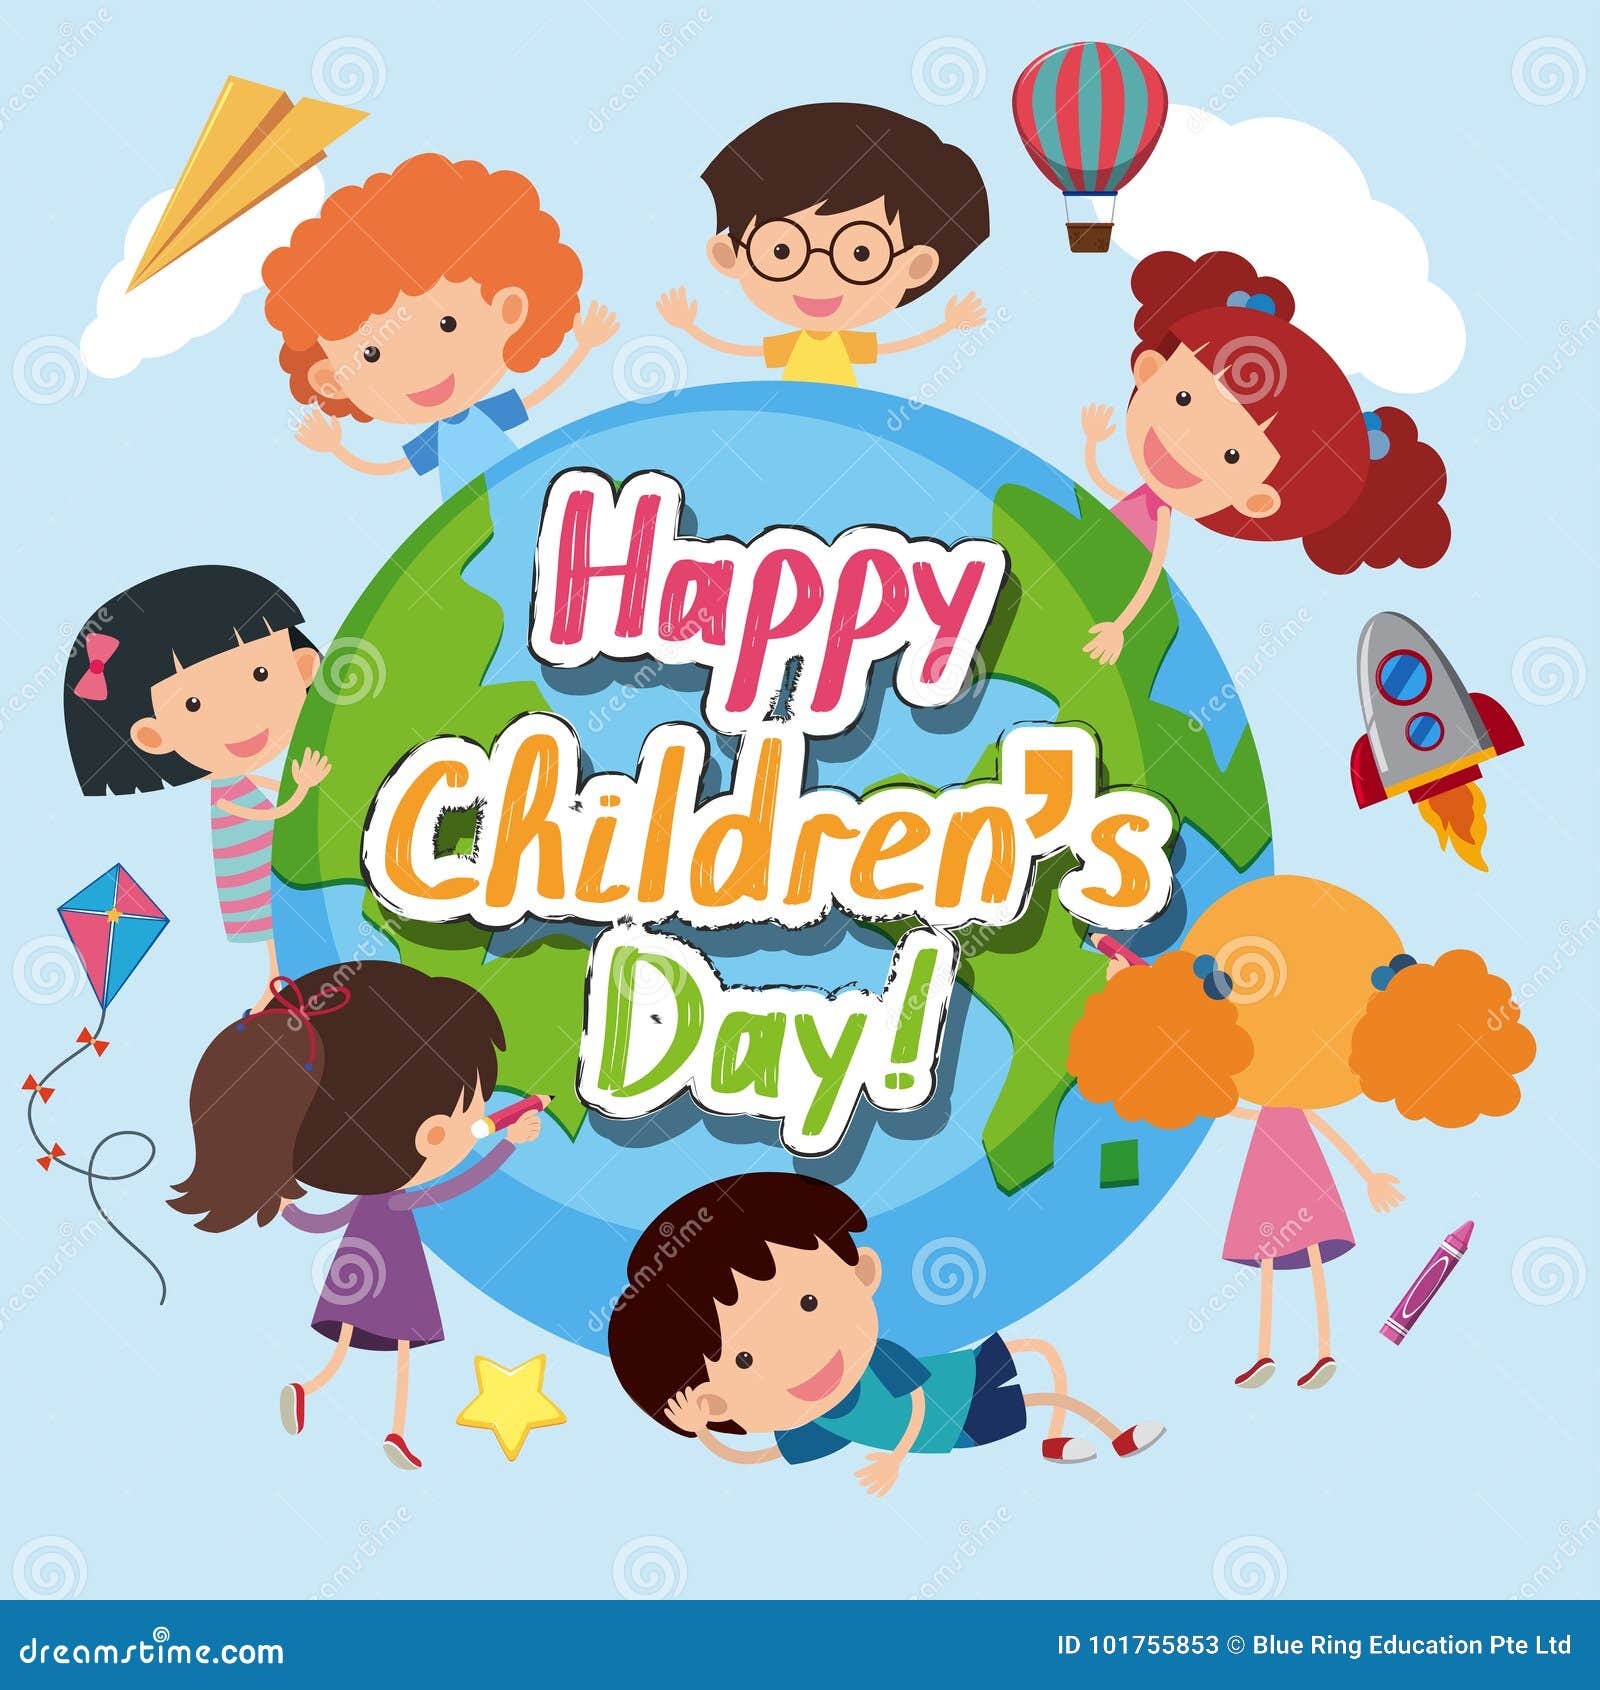 Happy Childrens Day For Children Celebration Stock Illustration Stock  Illustration - Download Image Now - iStock